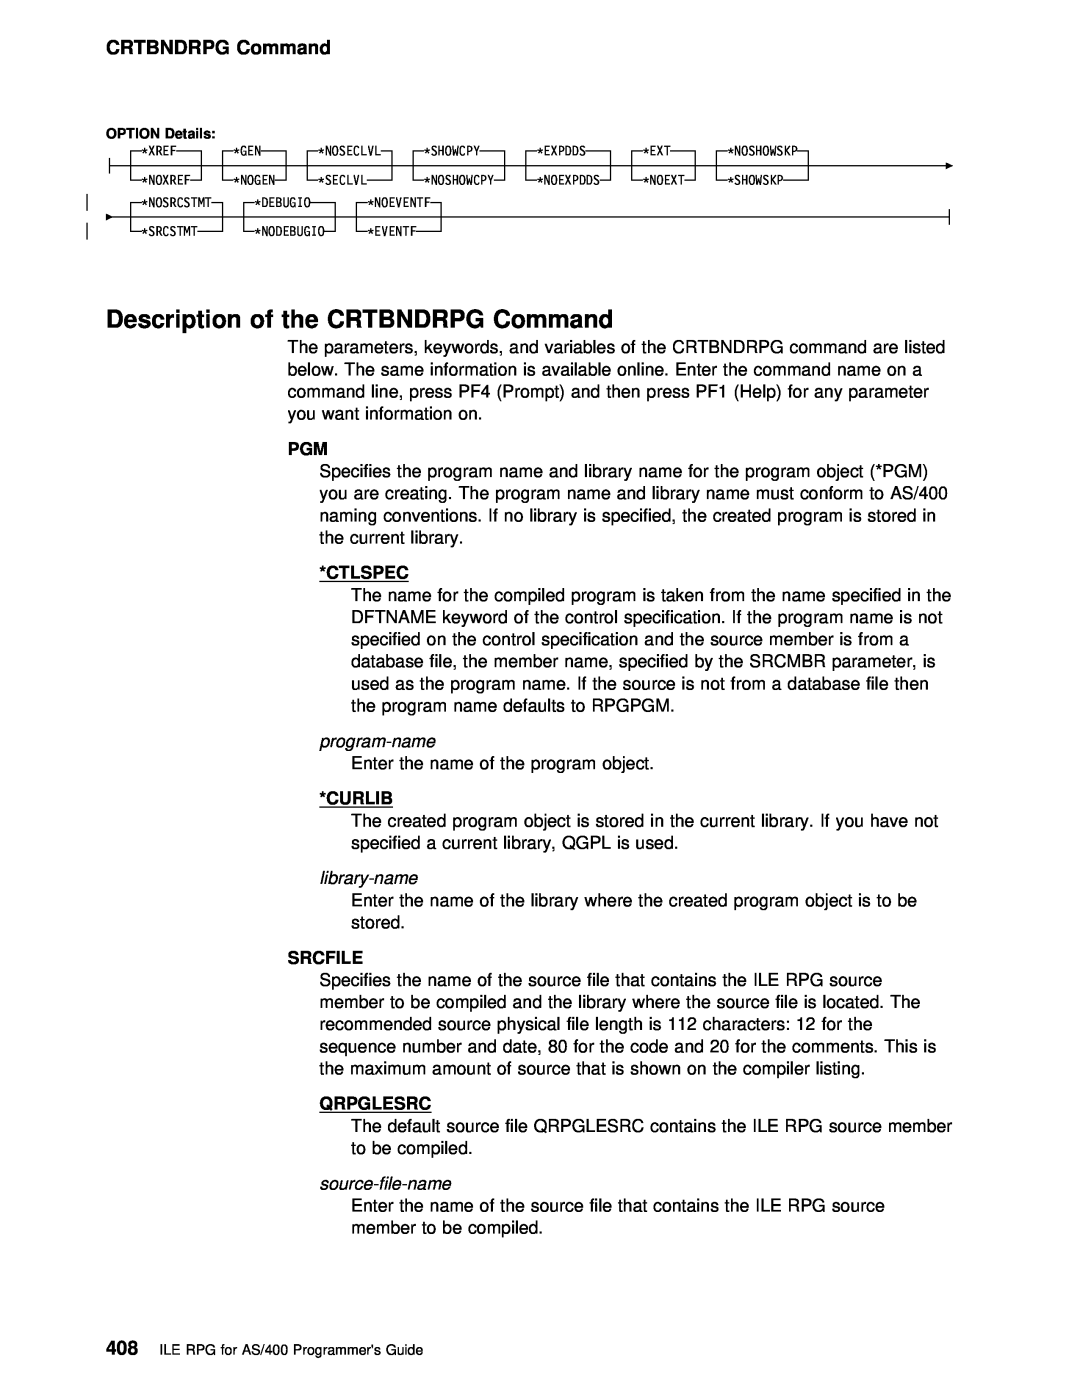 IBM AS/400 manual Description of the CRTBNDRPG Command, OPTION Details 